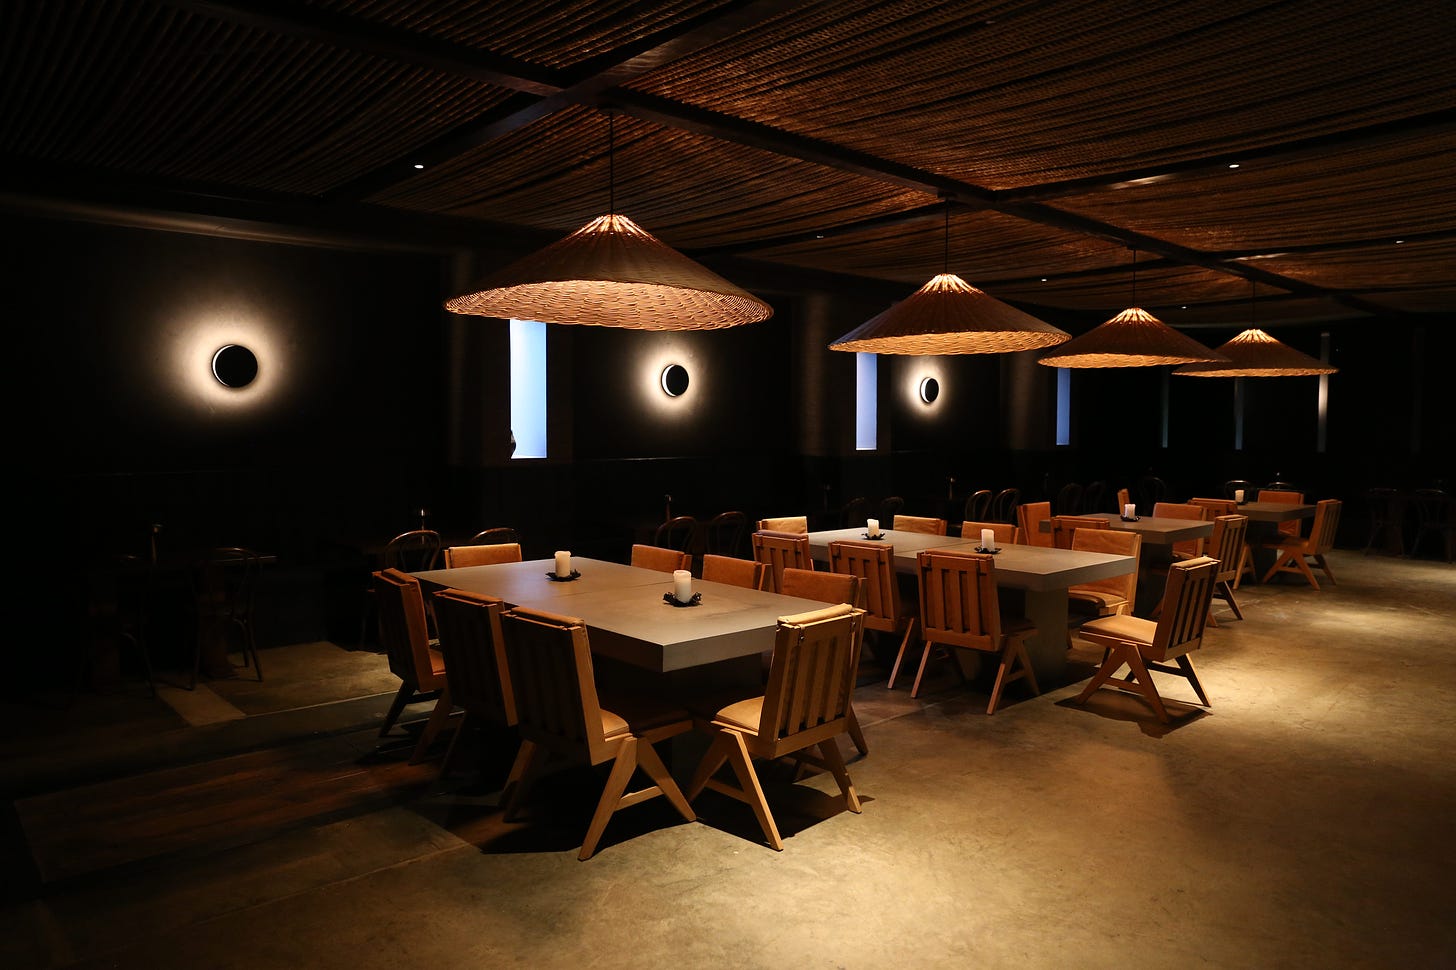 Douglas Katz is set to open his stylish Indian-inspired restaurant Amba:  Sneak peek (Photos) - cleveland.com